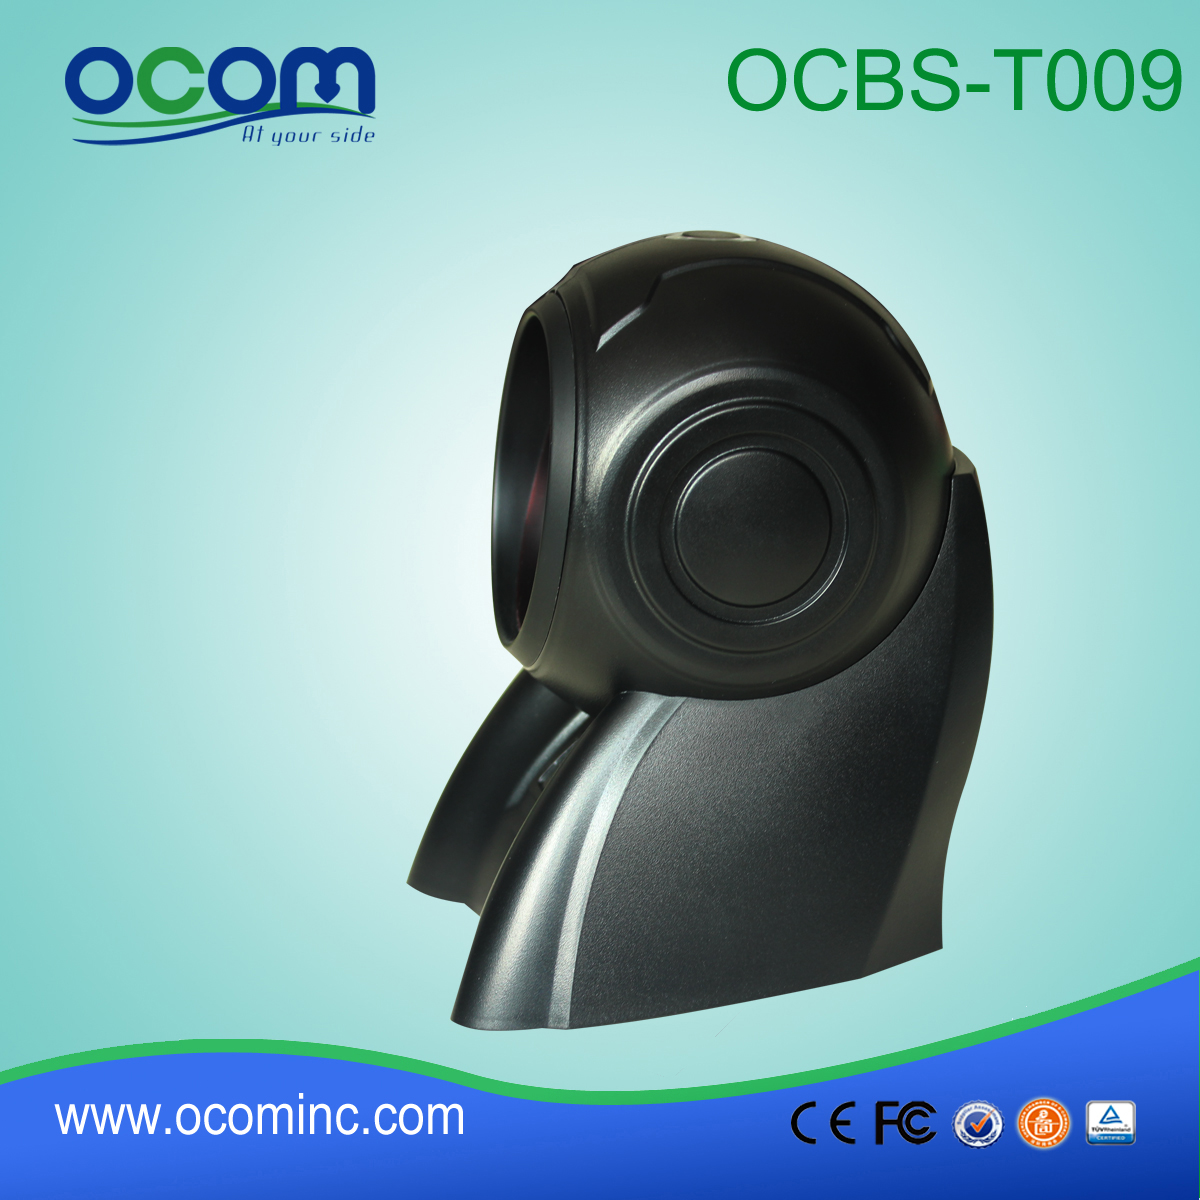 OCBs-T009: Σούπερ μάρκετ Auto Sense USB Barcode Scanner Machine